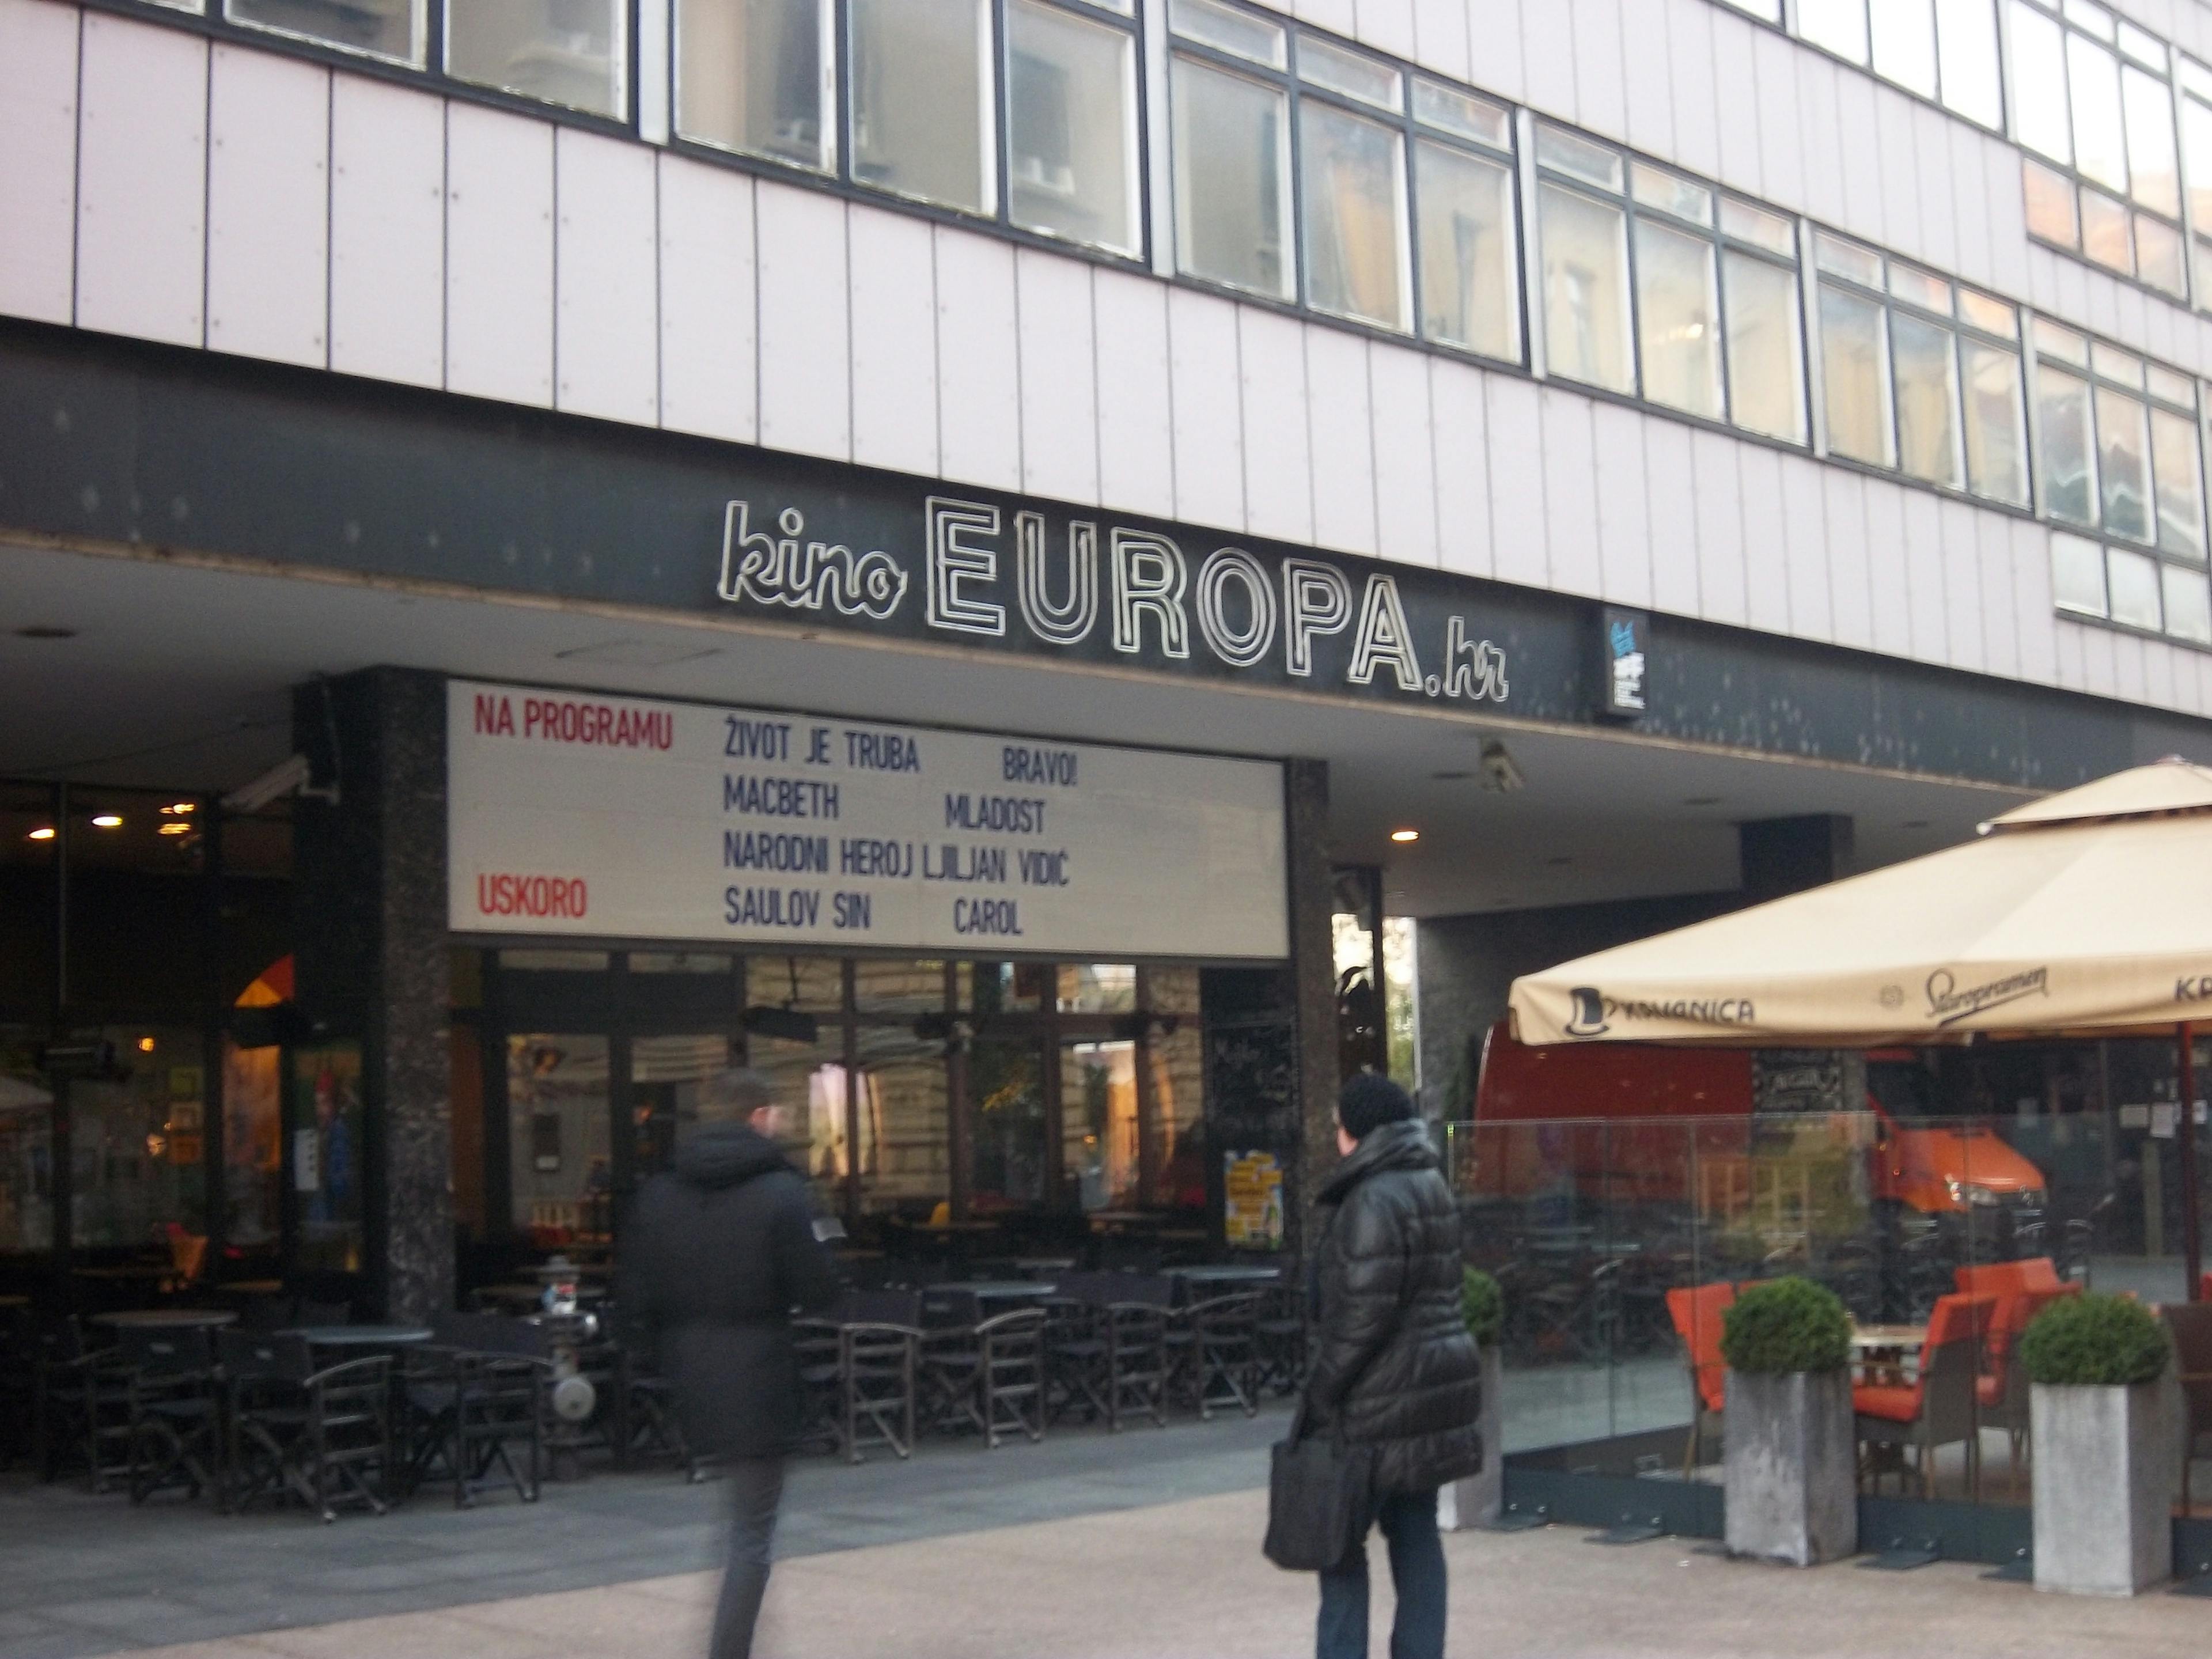 Image - Cinema Europa